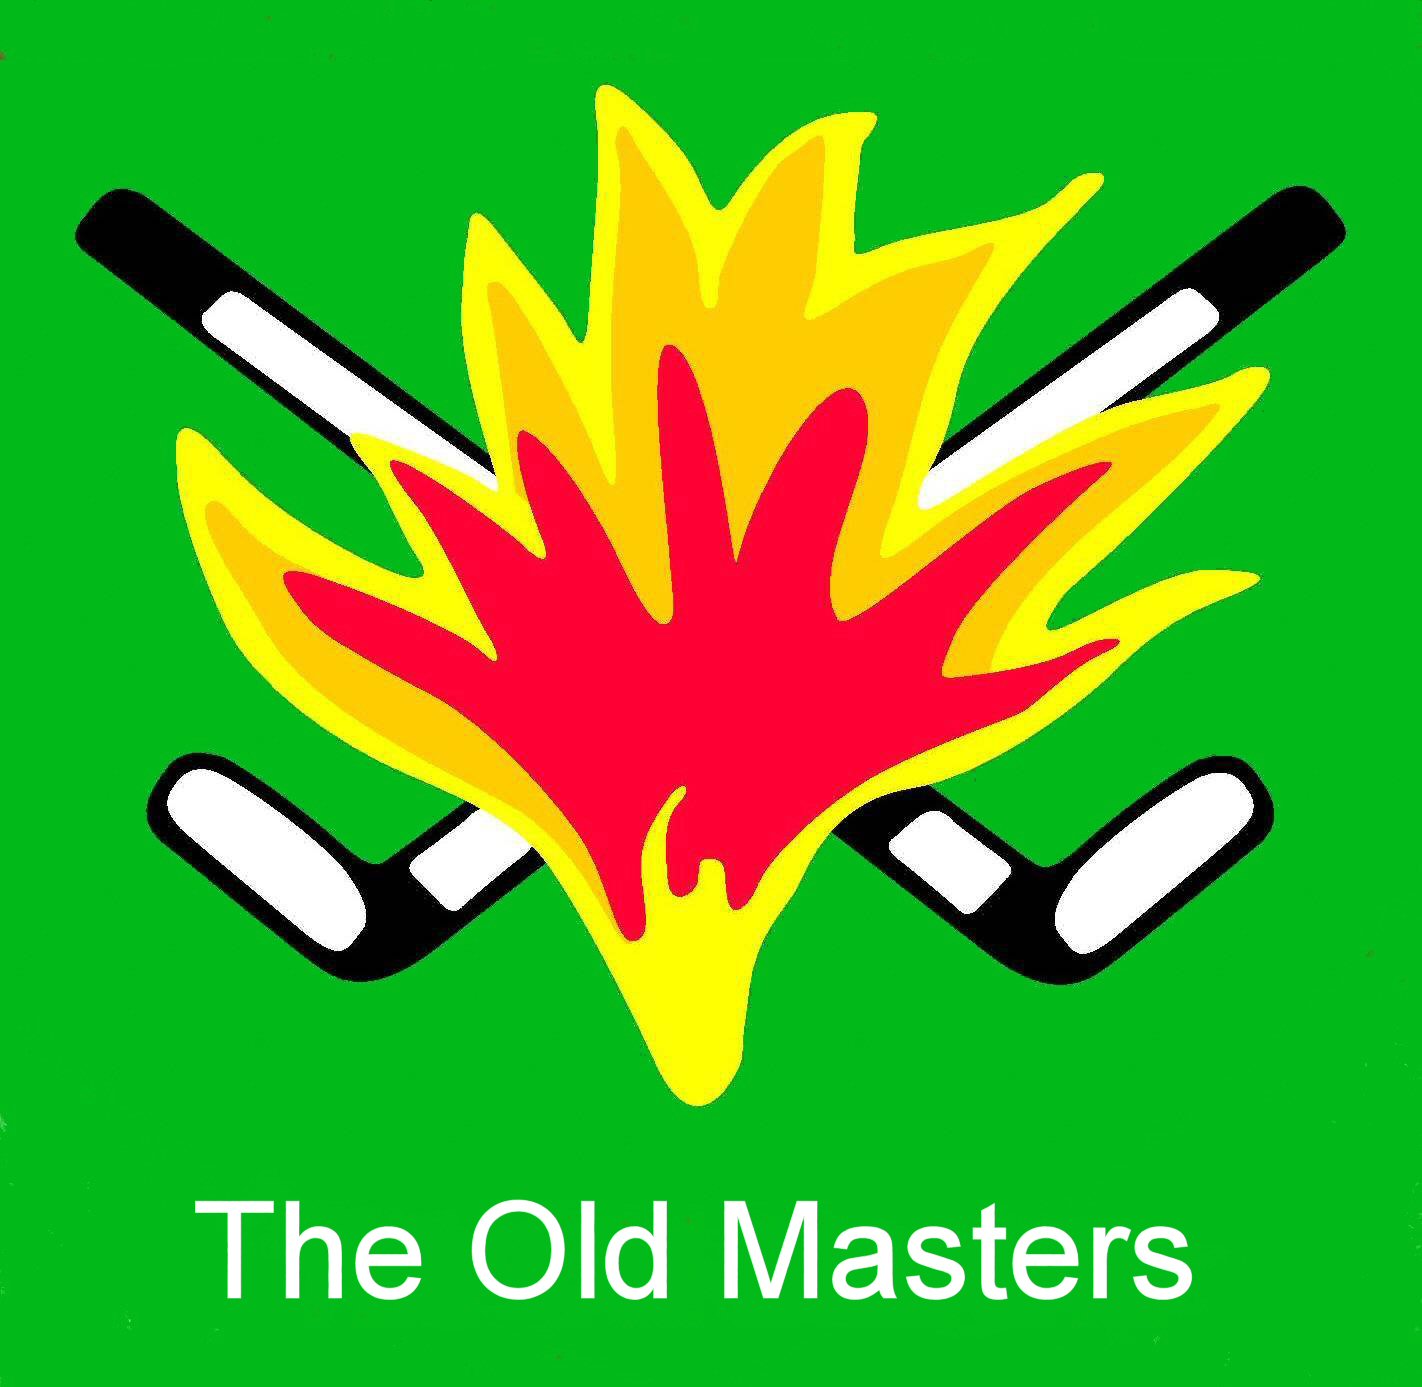 Old Masters Logo